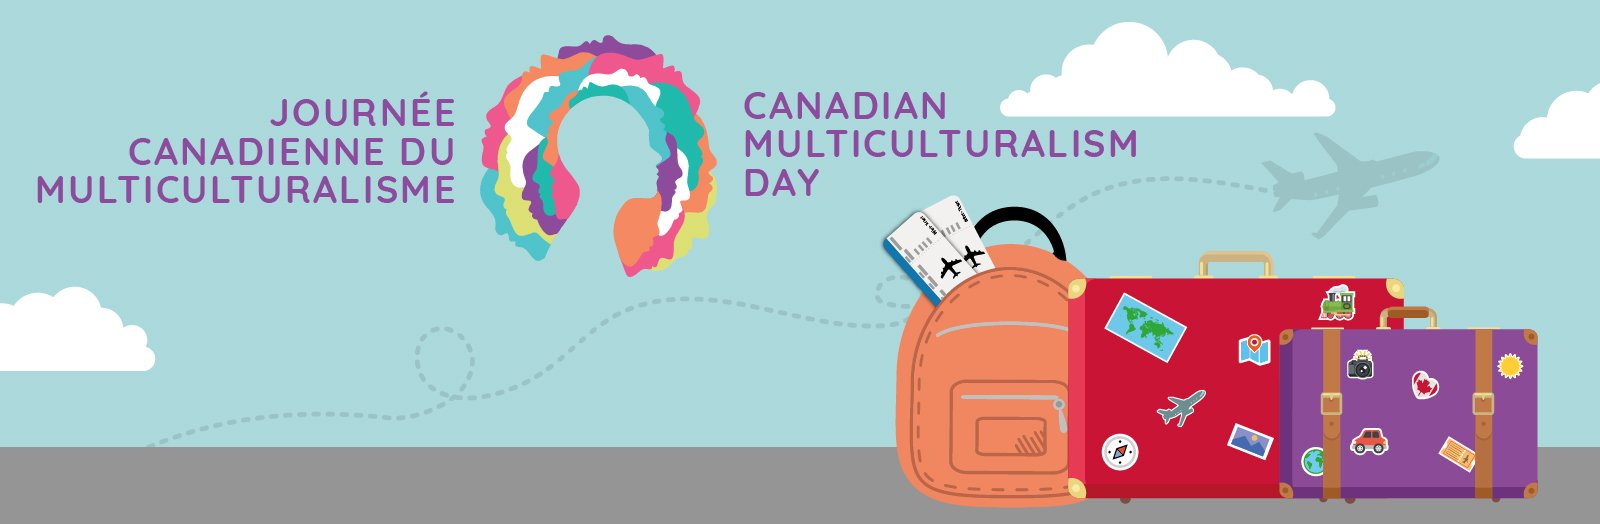 Logo journée canadienne du multiculturalisme